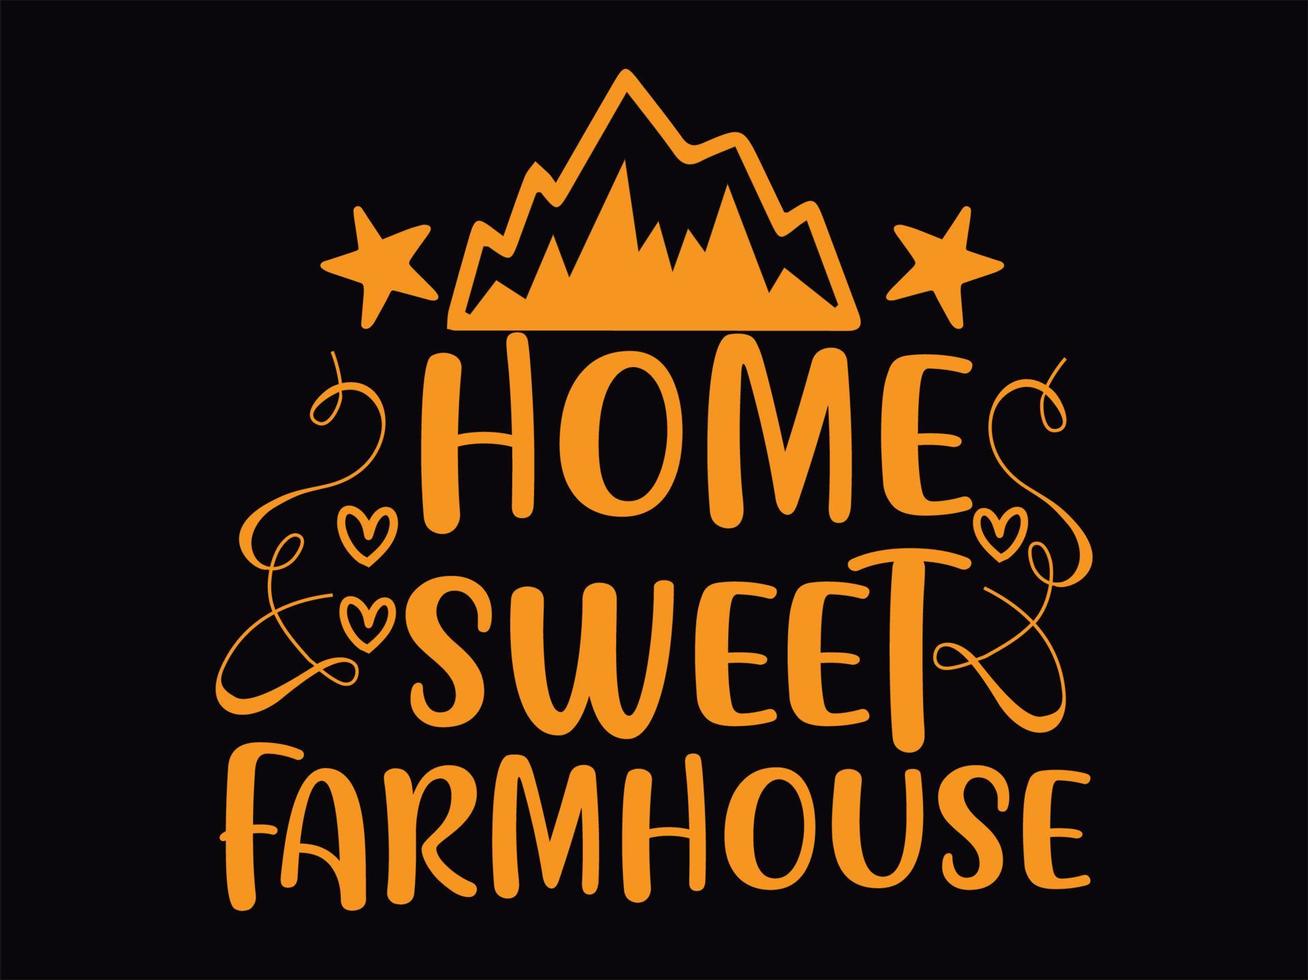 Farmhouse t-shirt design file vector